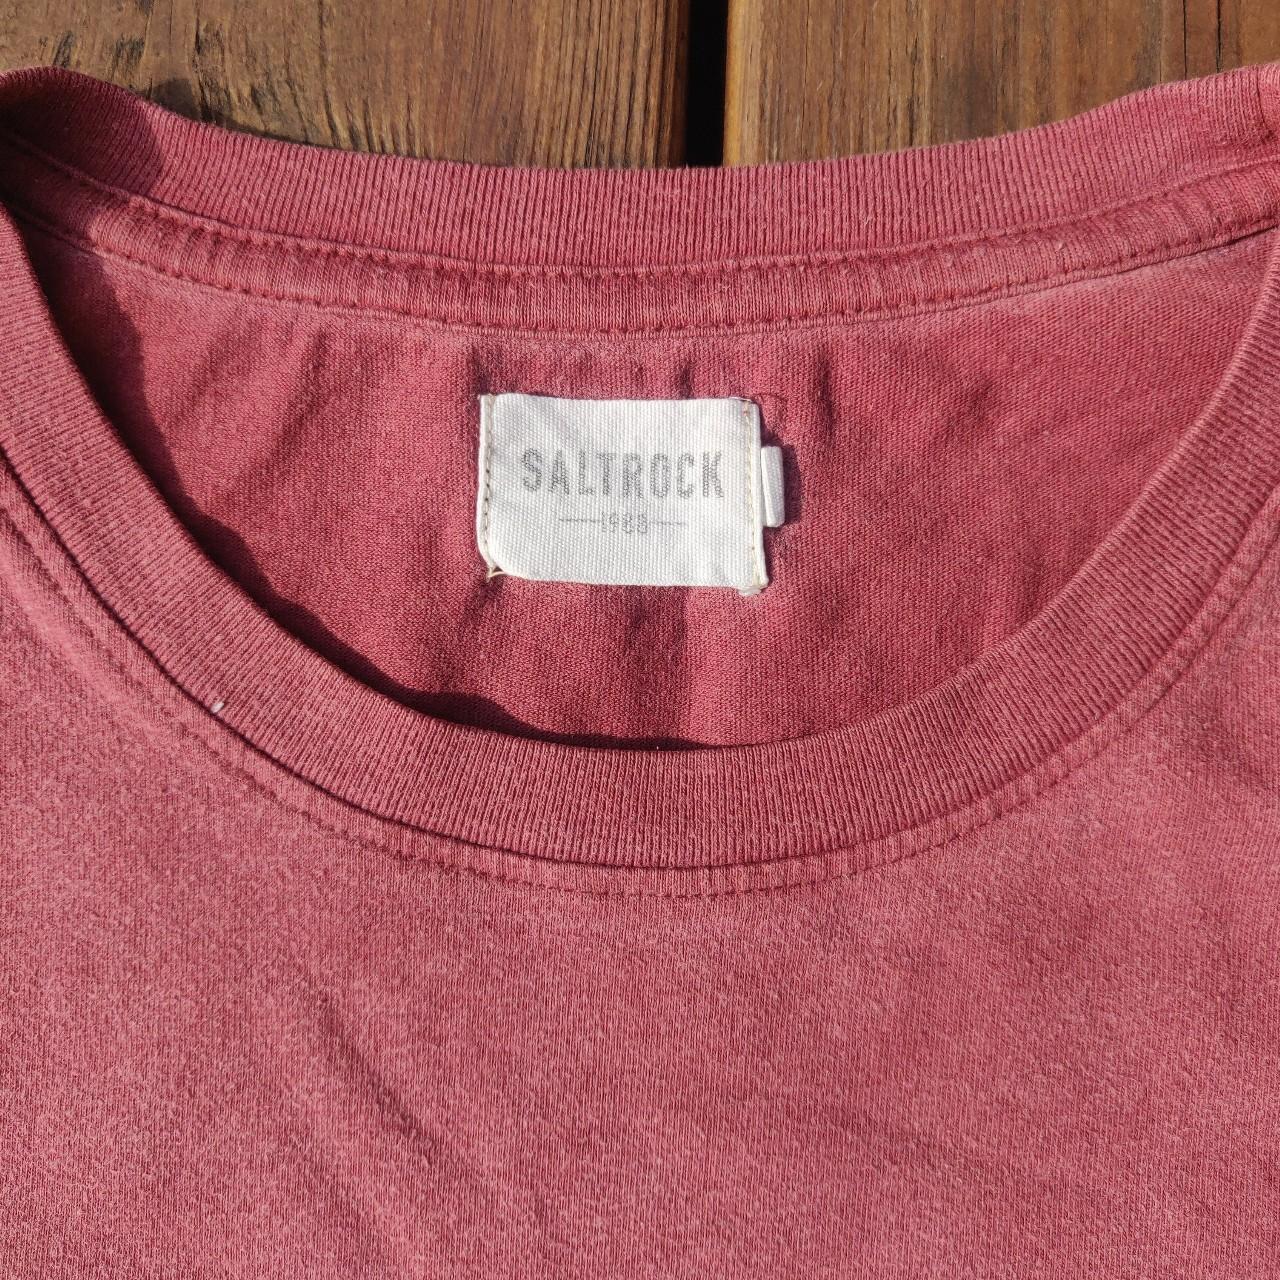 Saltrock Men's Red and Burgundy T-shirt | Depop